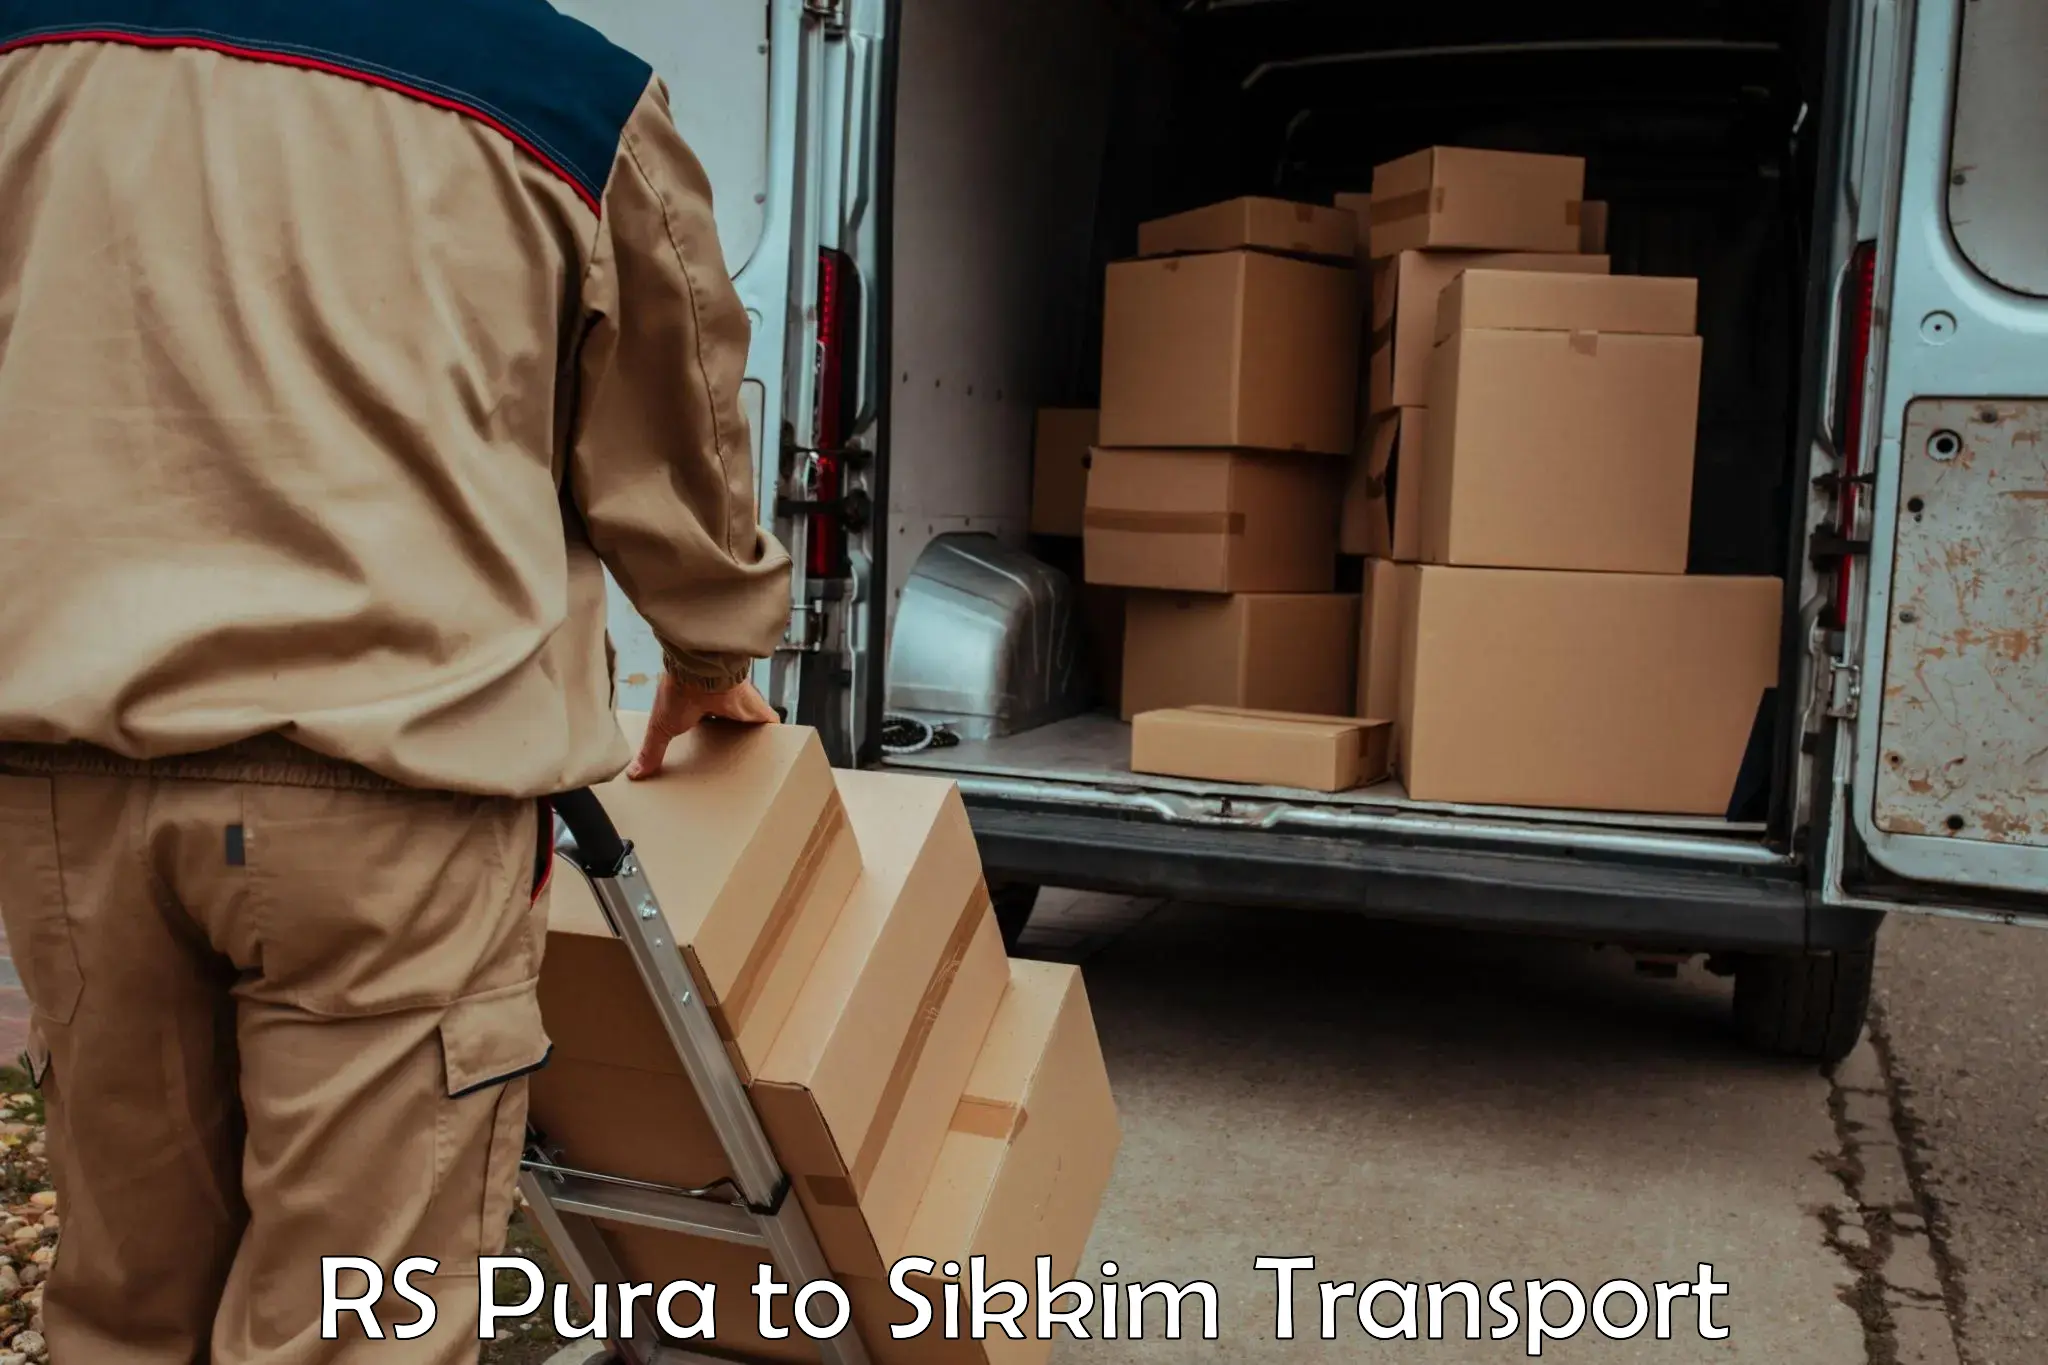 Shipping partner RS Pura to Namchi